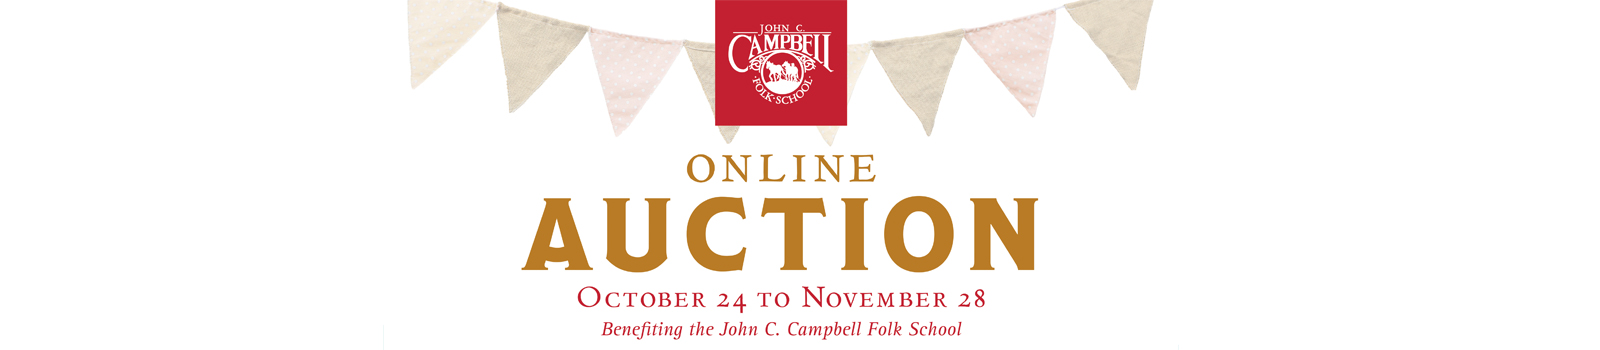 festive ribbon for online auction